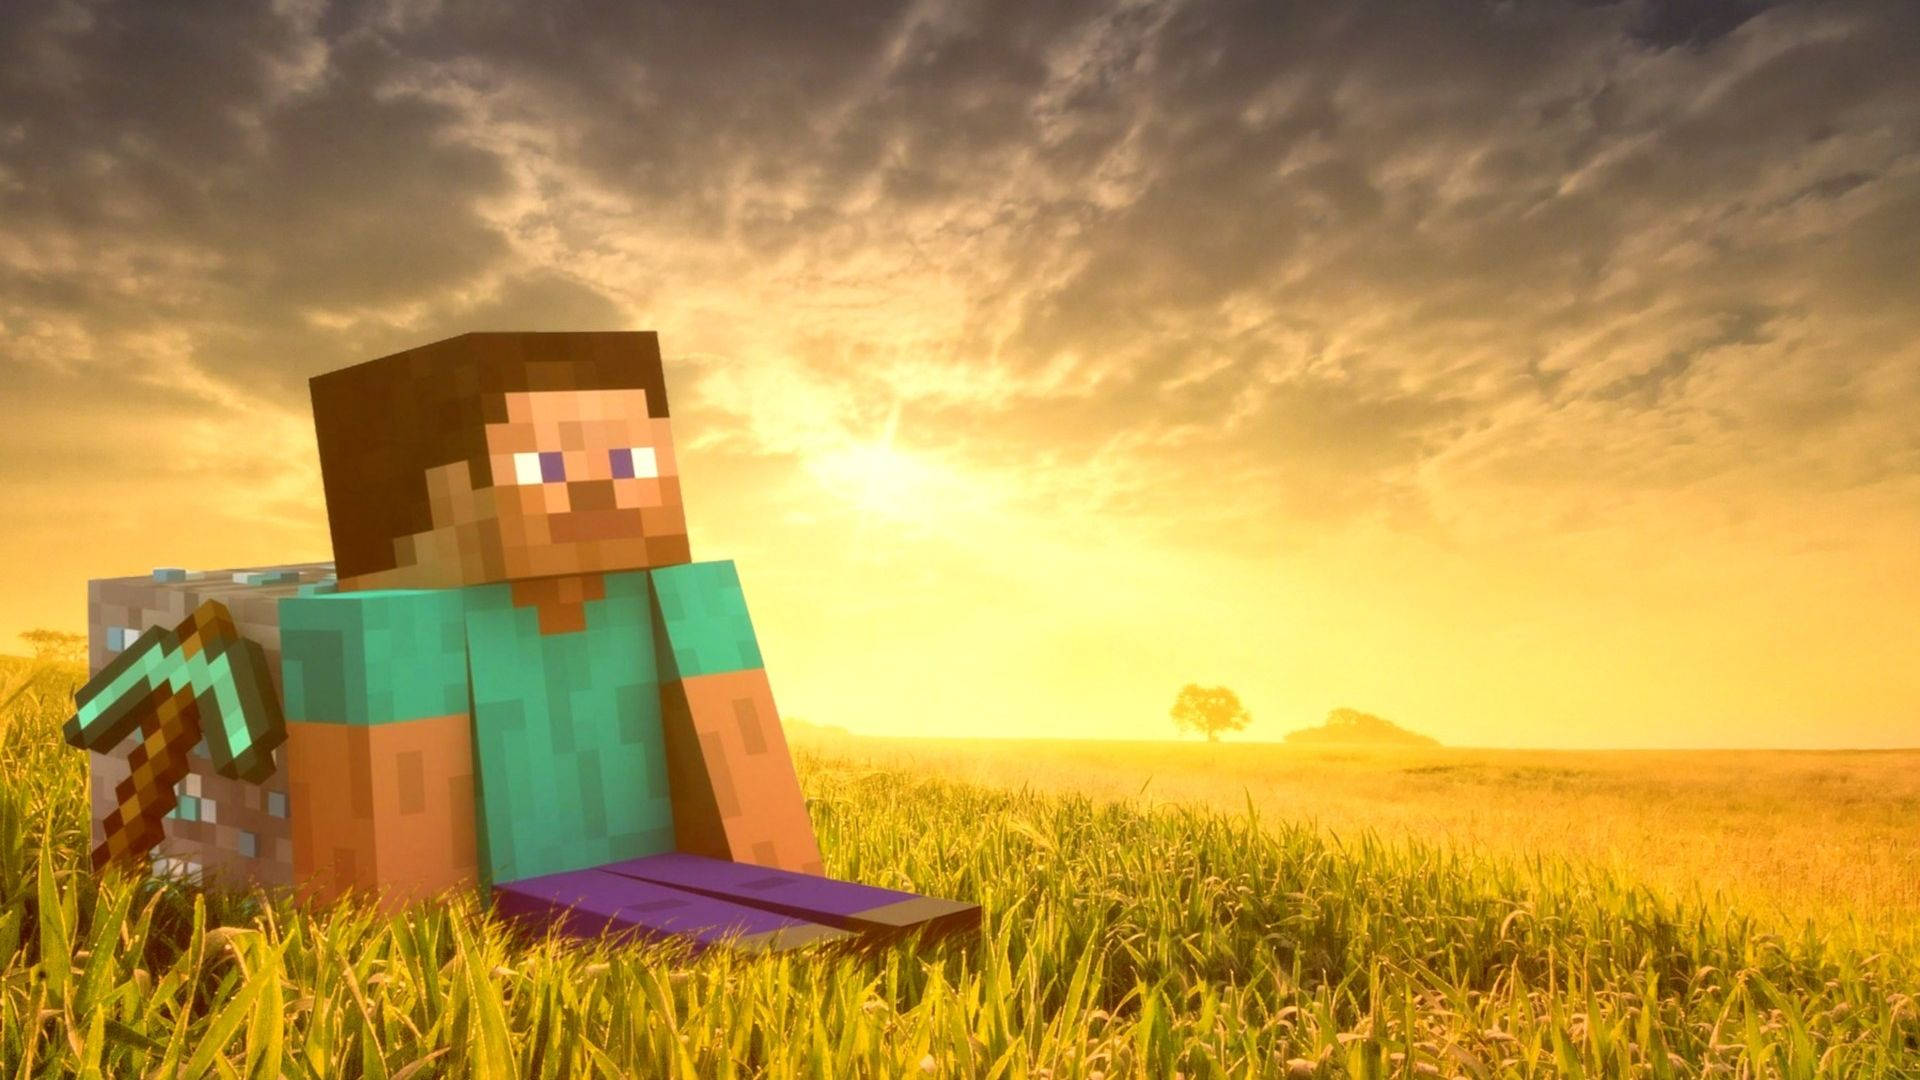 Steve On Grass And Diamond Minecraft Hd